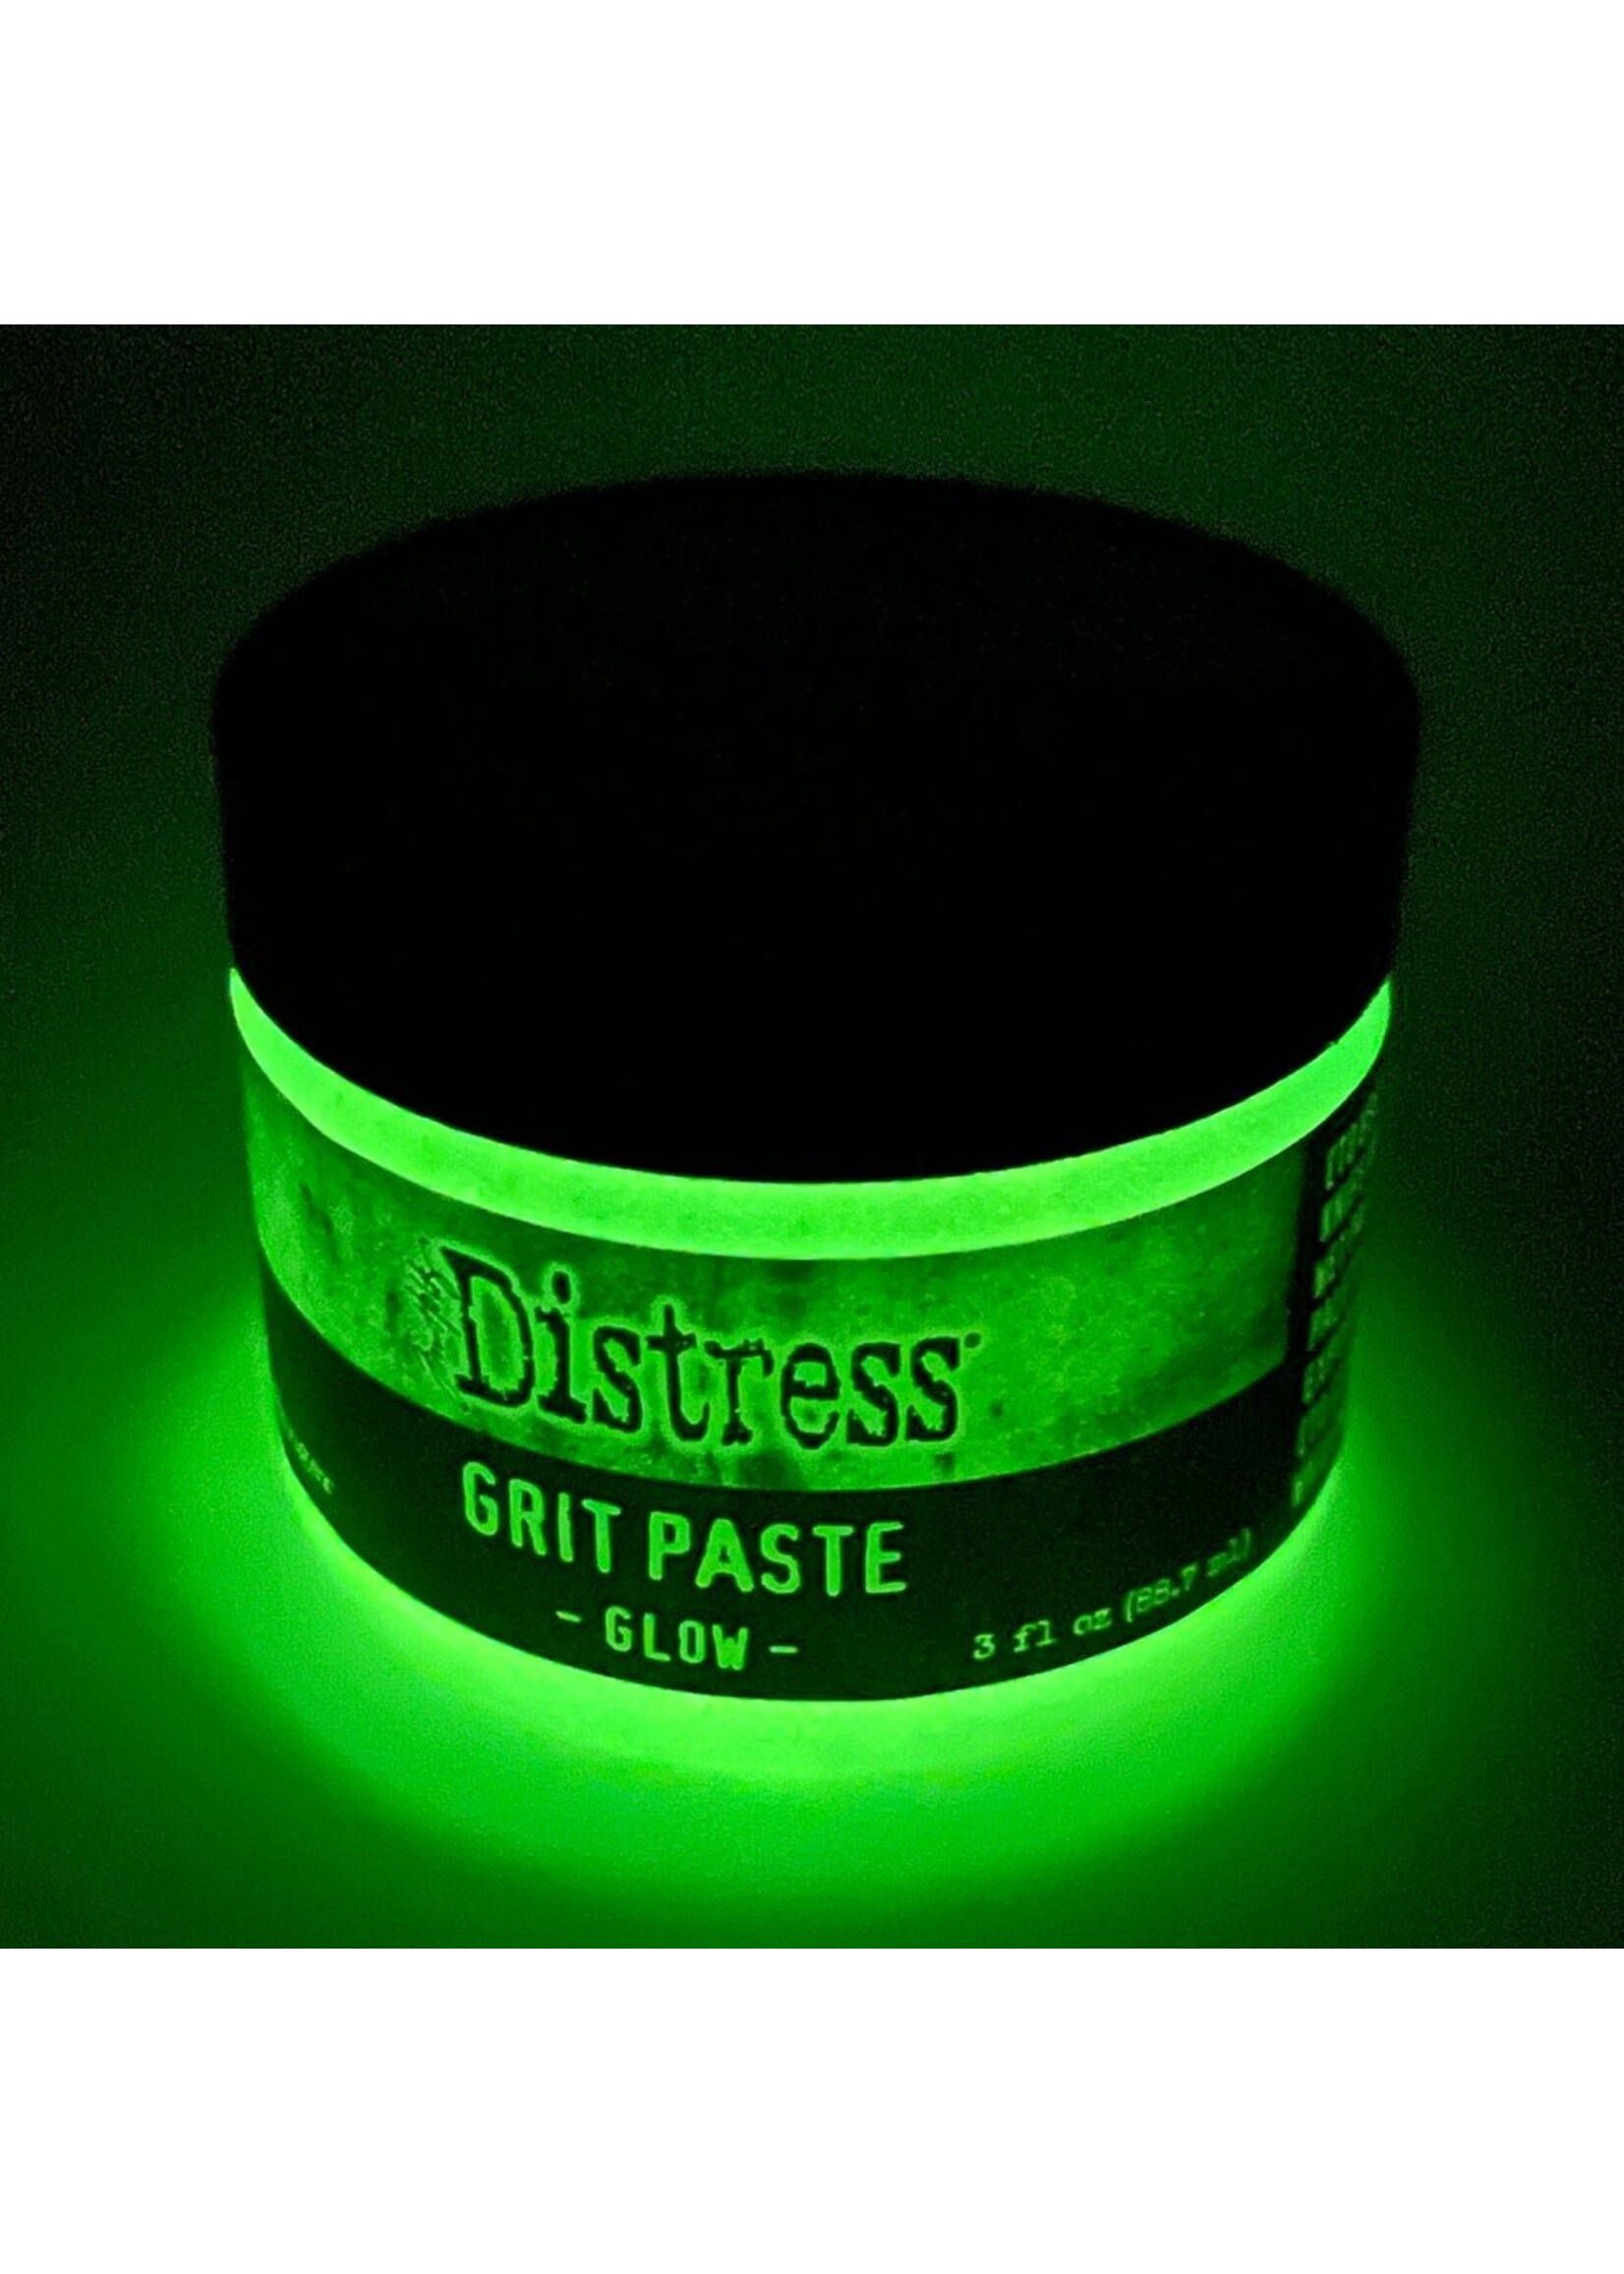 Idea-ology Tim Holtz Distress Grit Paste Glow 3oz-Glow